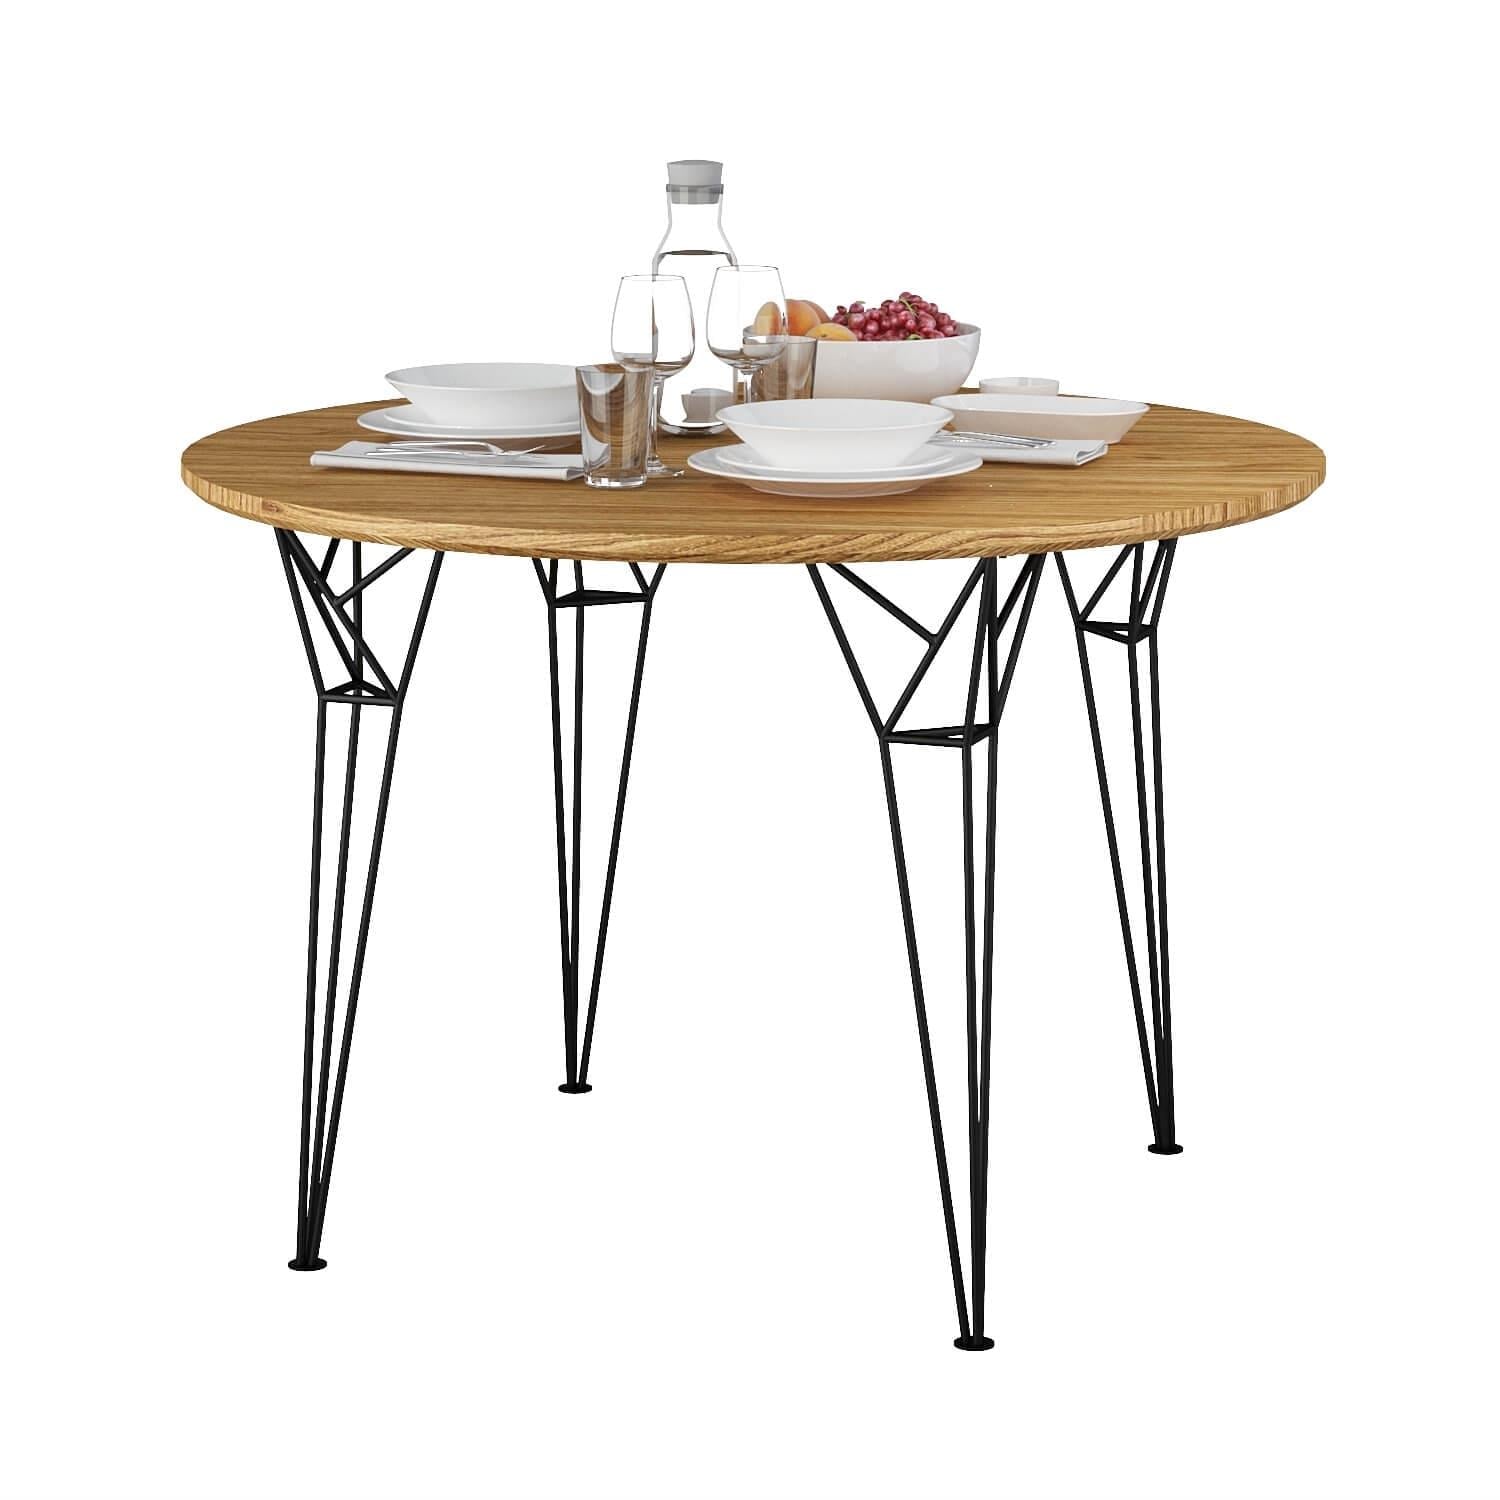 Apollo dining table round